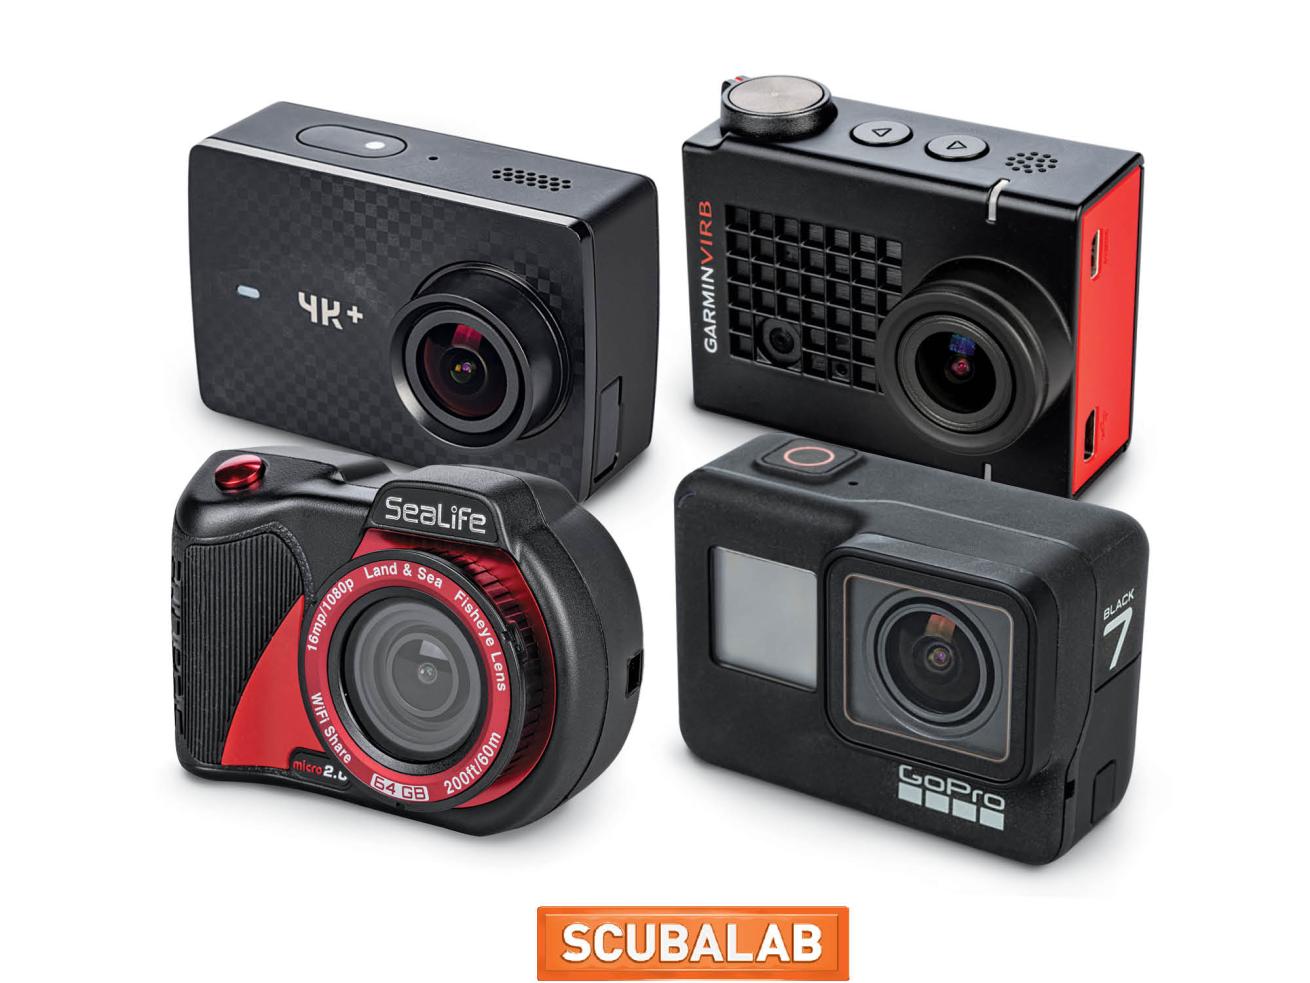 ScubaLab action cameras